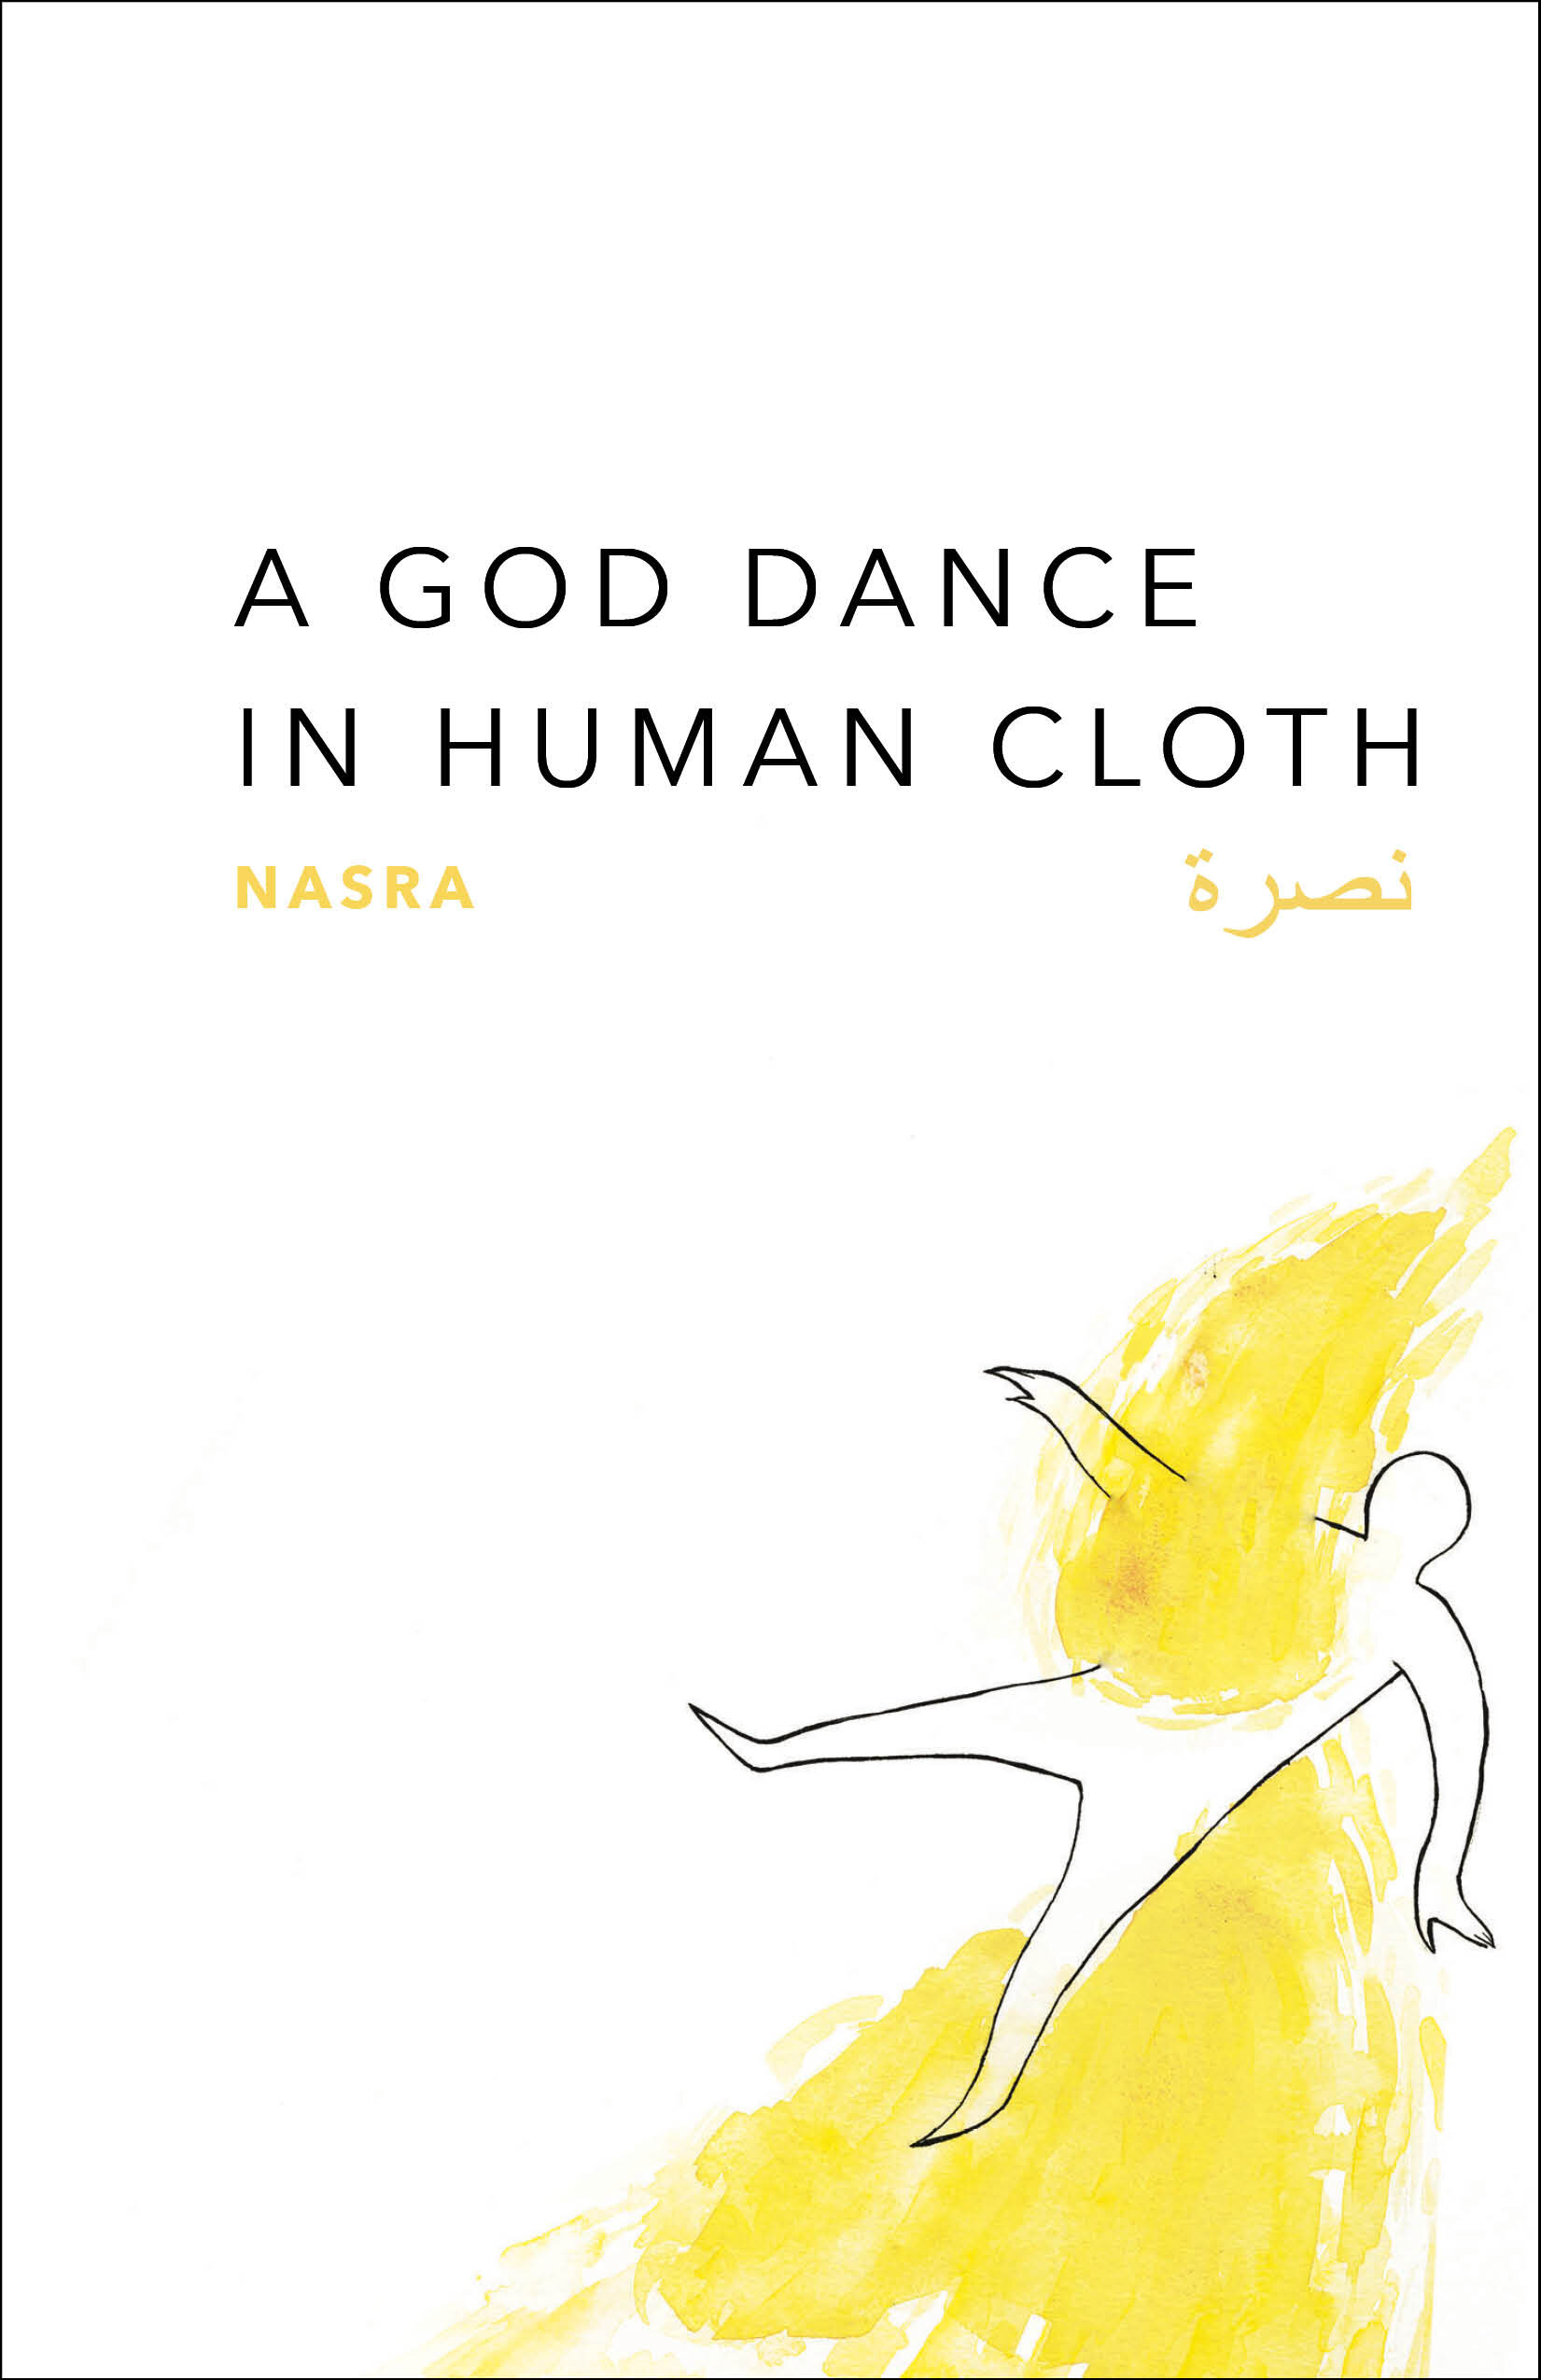 A God Dance in Human Cloth